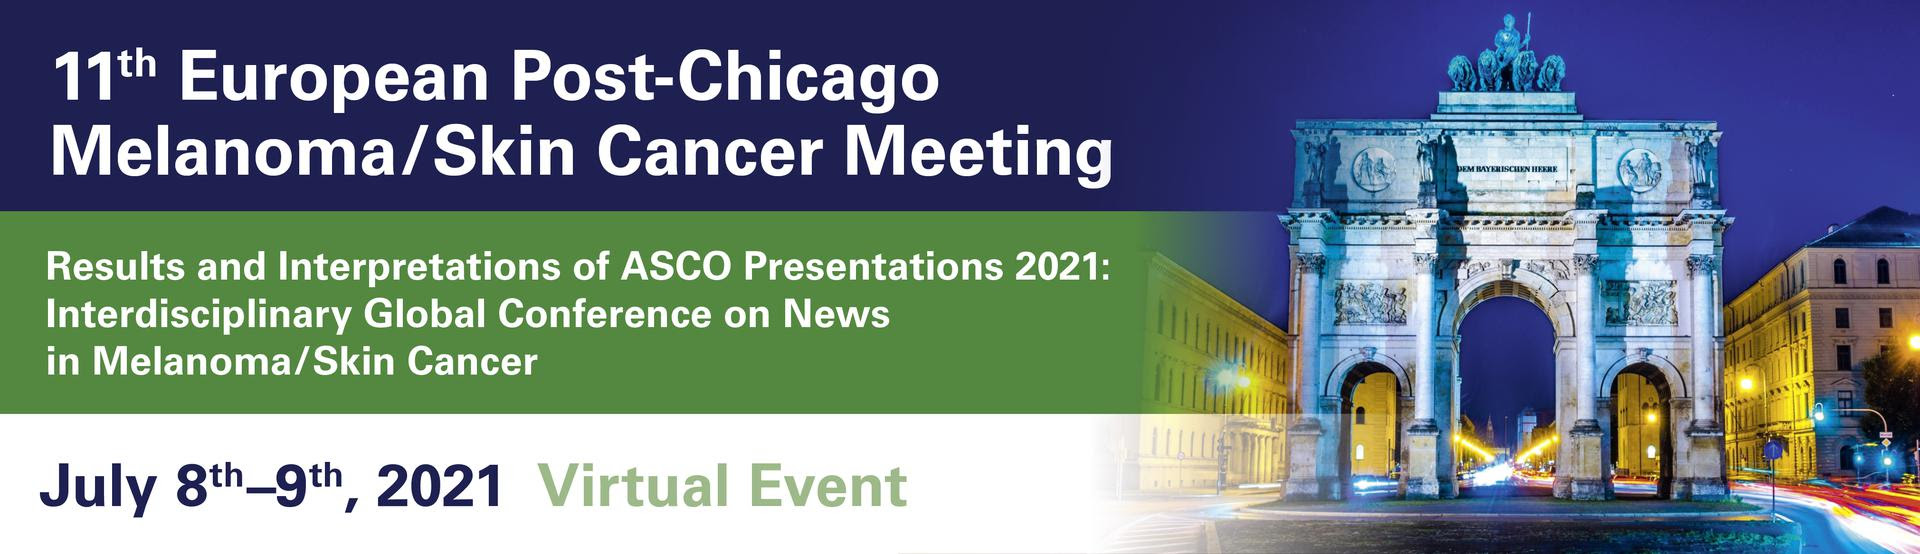 11th European Post-Chicago Melanoma/Skin Cancer Meeting 2021